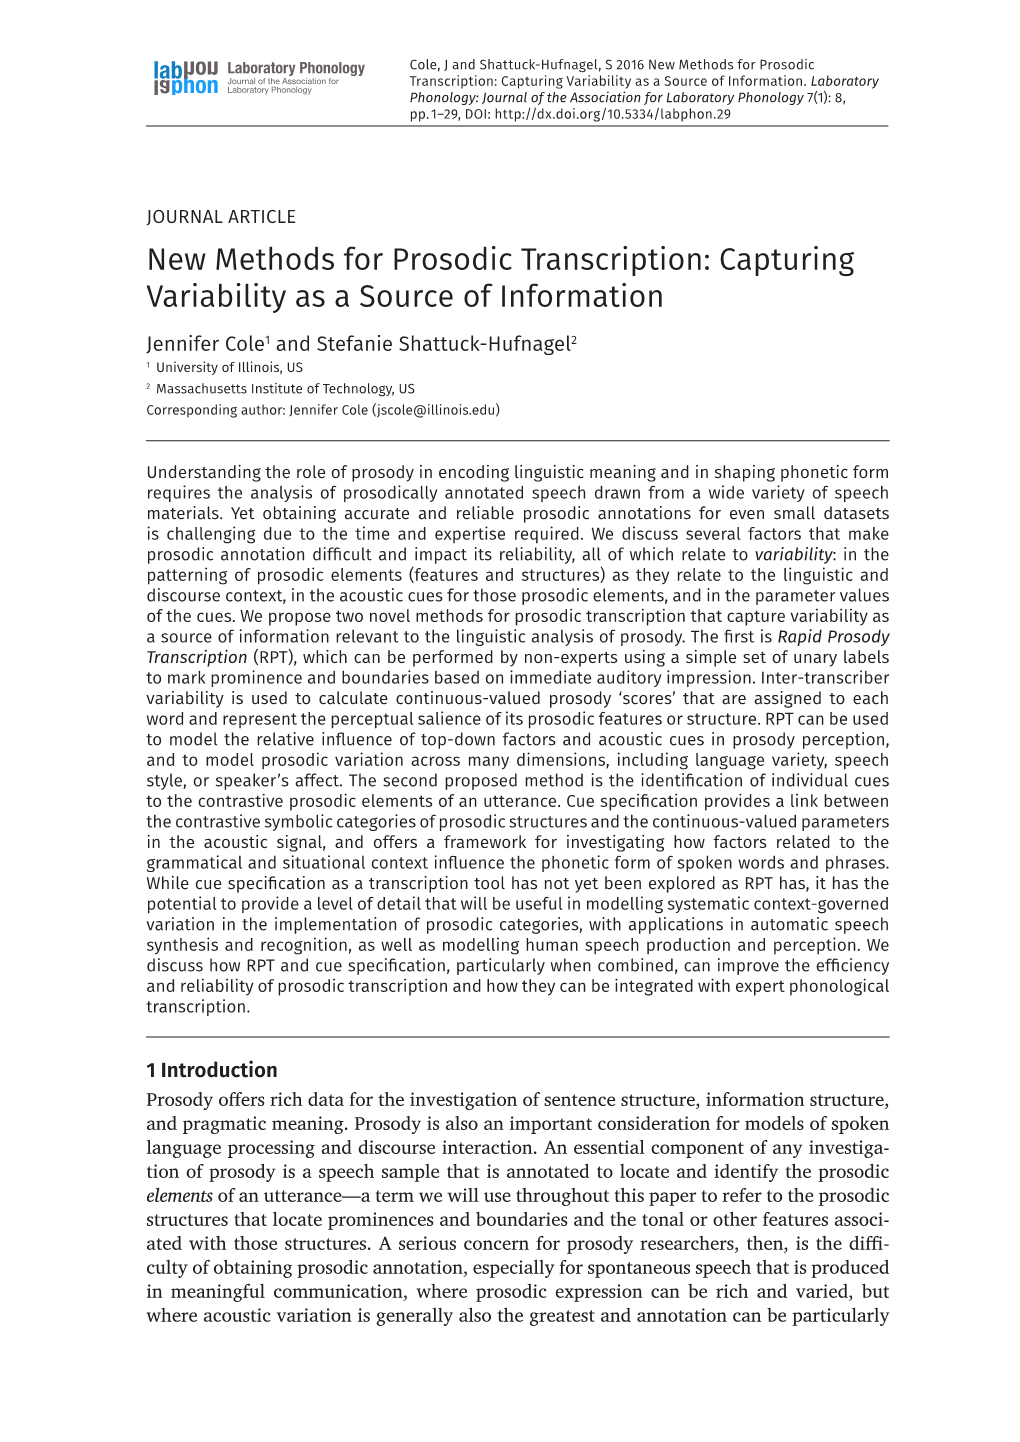 New Methods for Prosodic Transcription: Capturing Variability